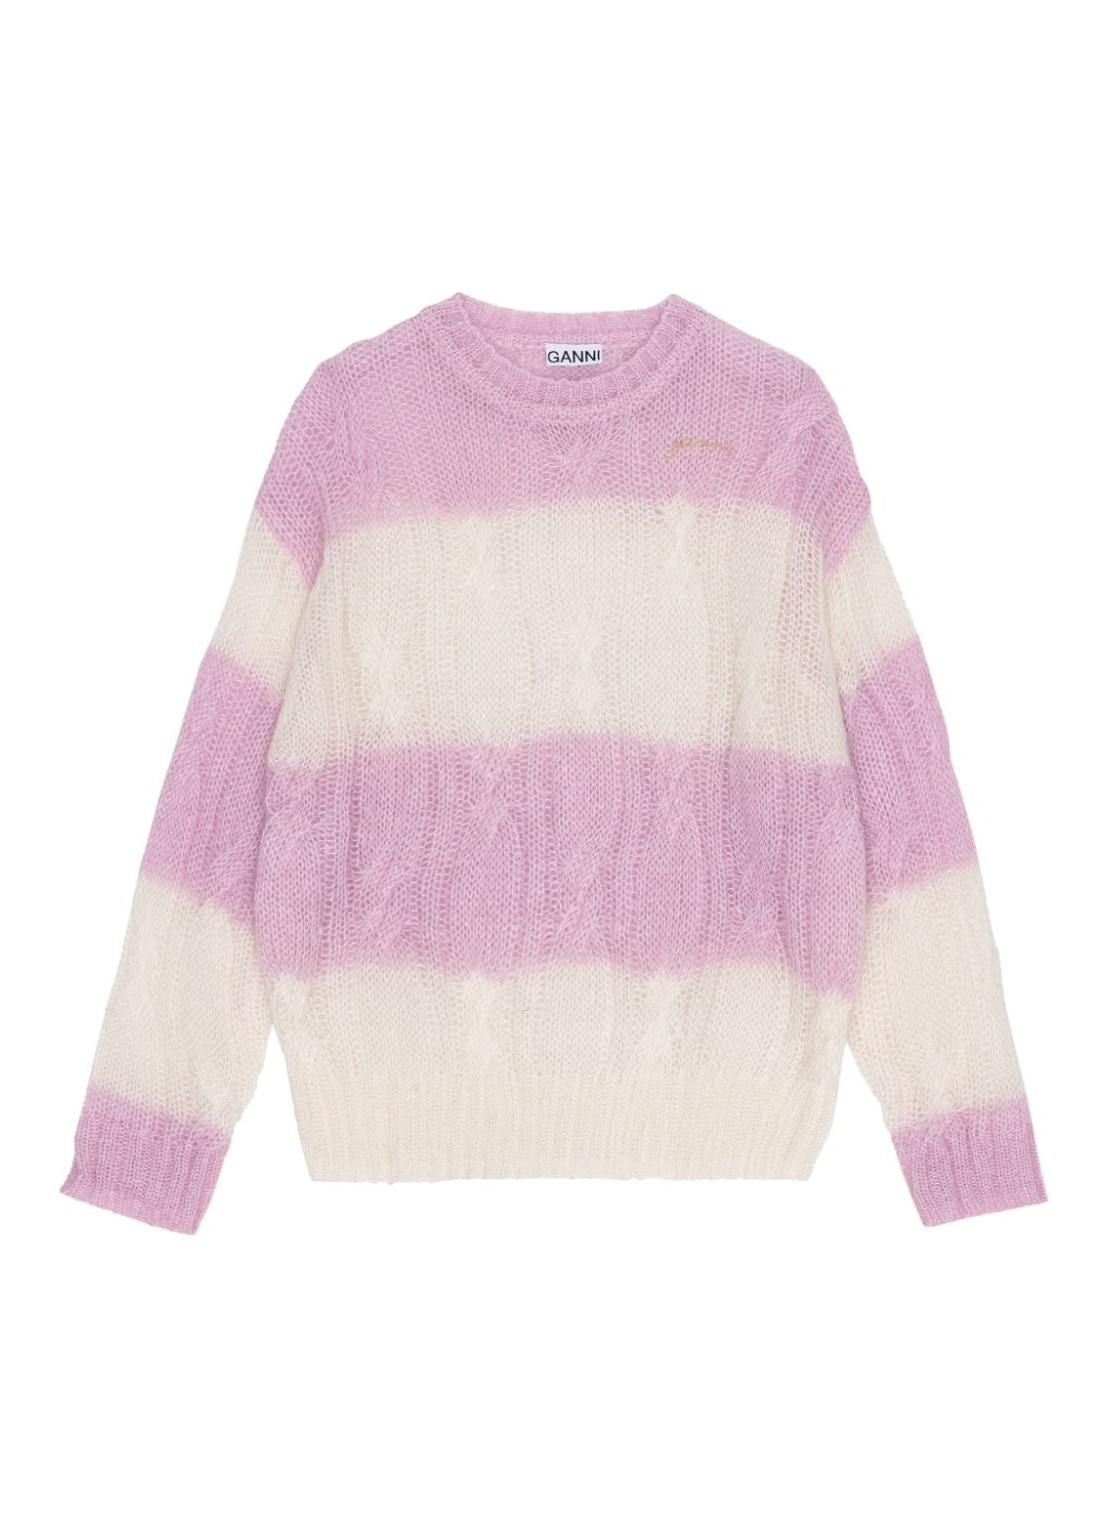 Punto ganni knitwear woman mohair striped cable o-neck k2202 395 talla rosa
 